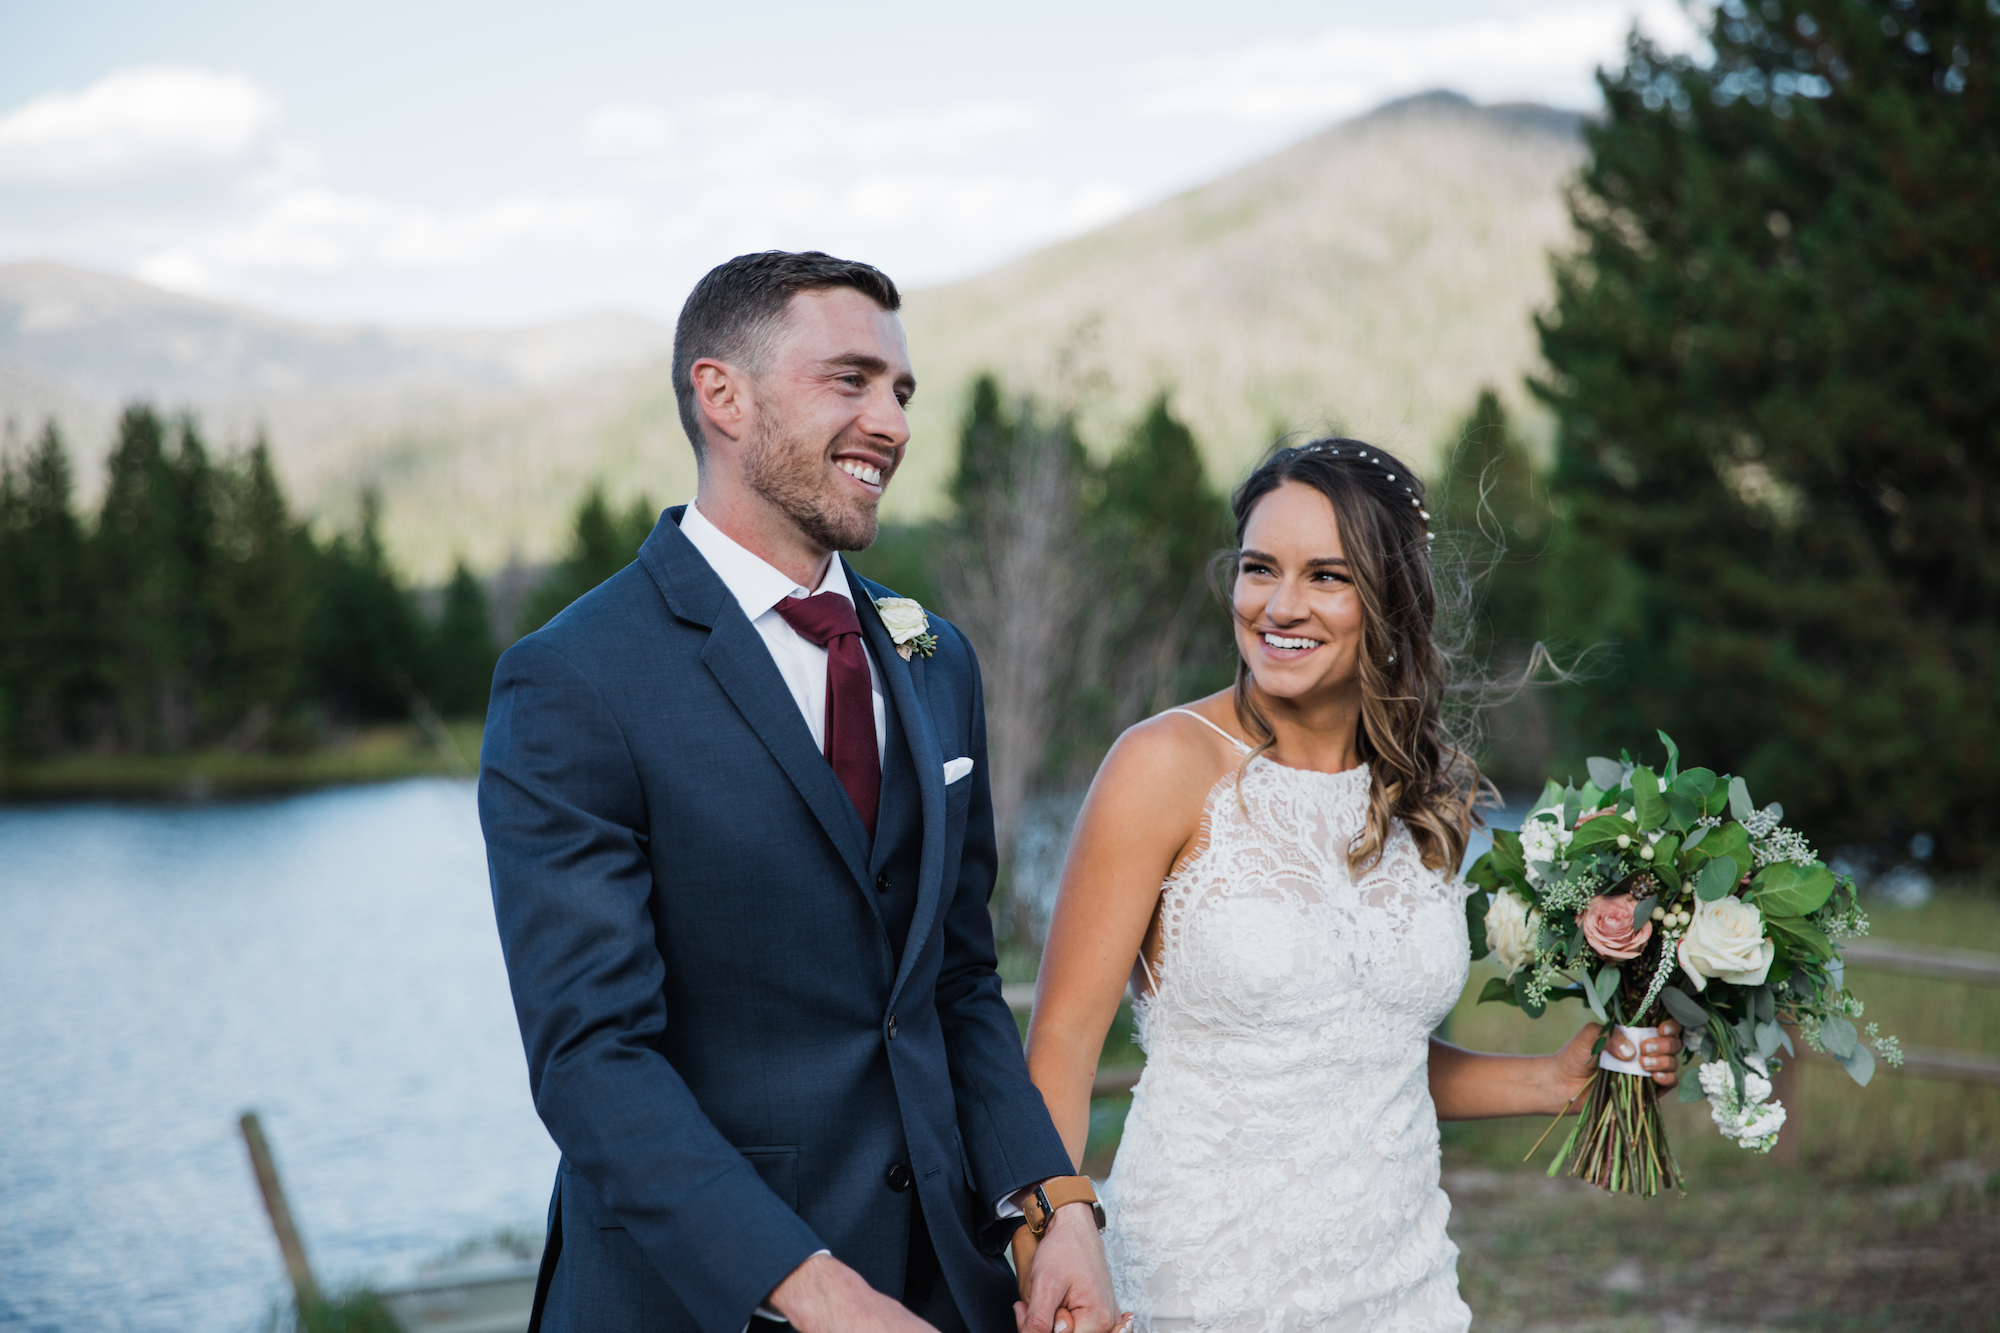 Grand Lake wedding photographer in Colorado